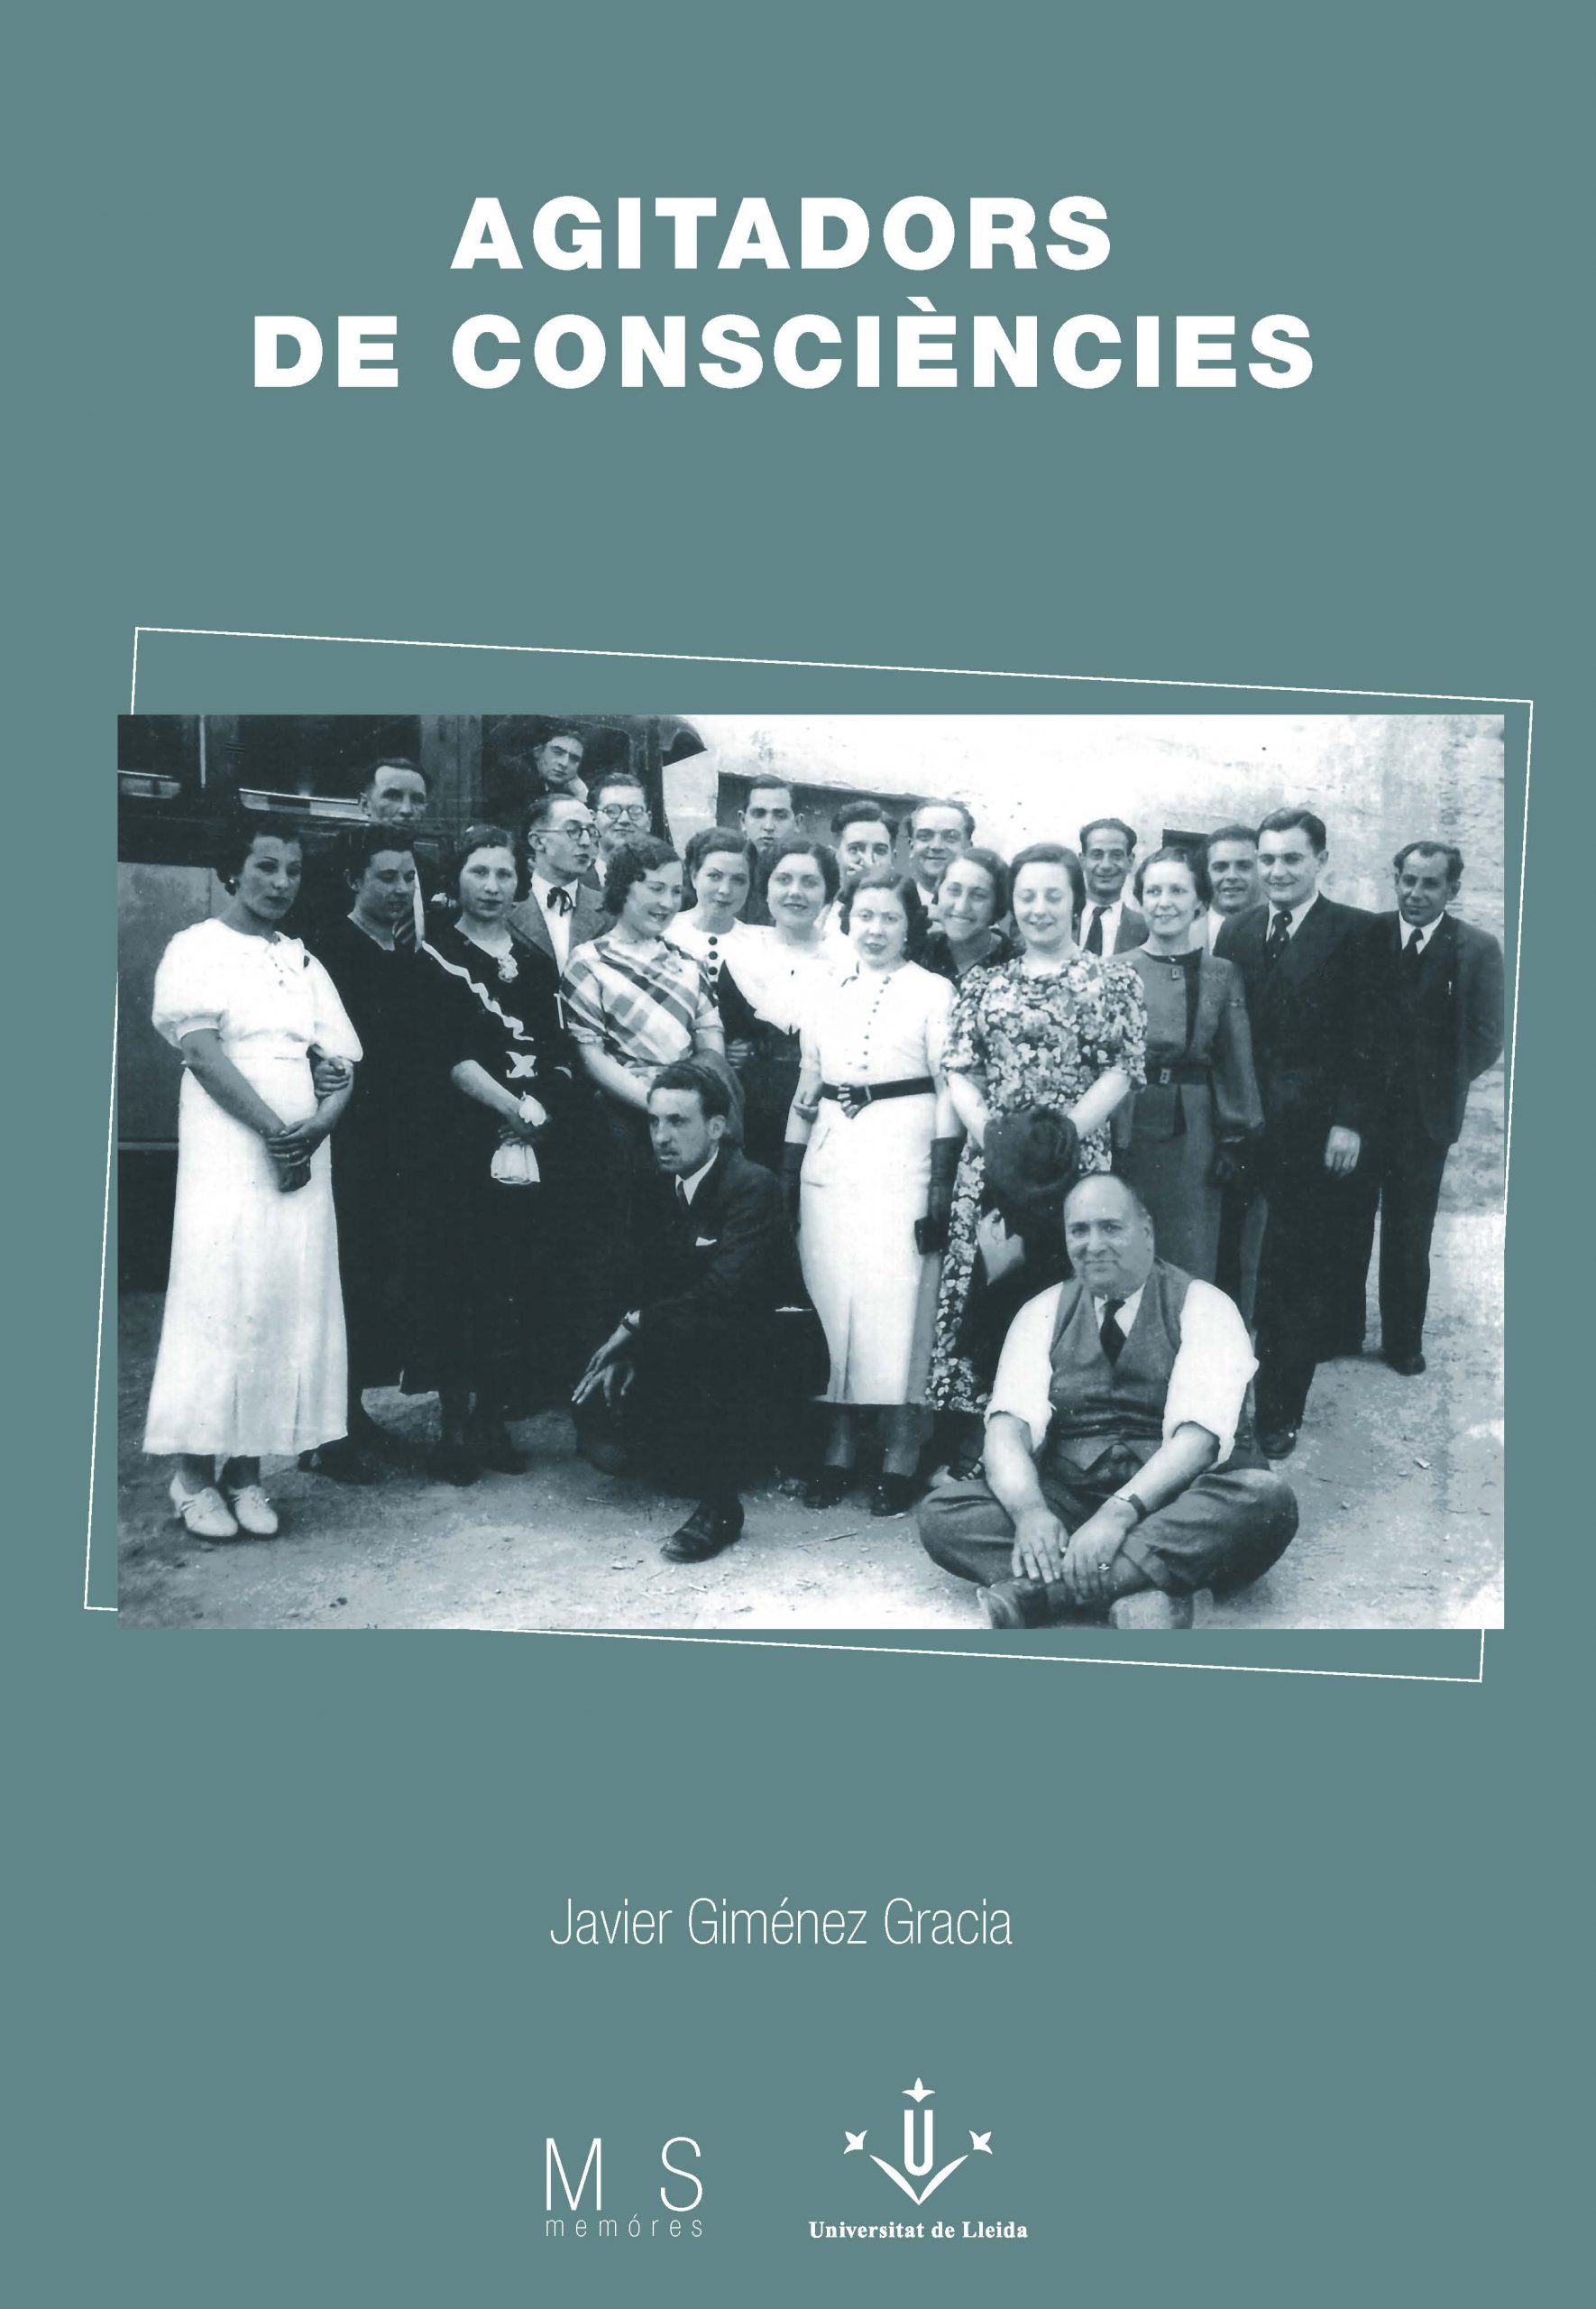 Agitadors de consciències / Agitadores de conciencias, de Javier Giménez Gracia